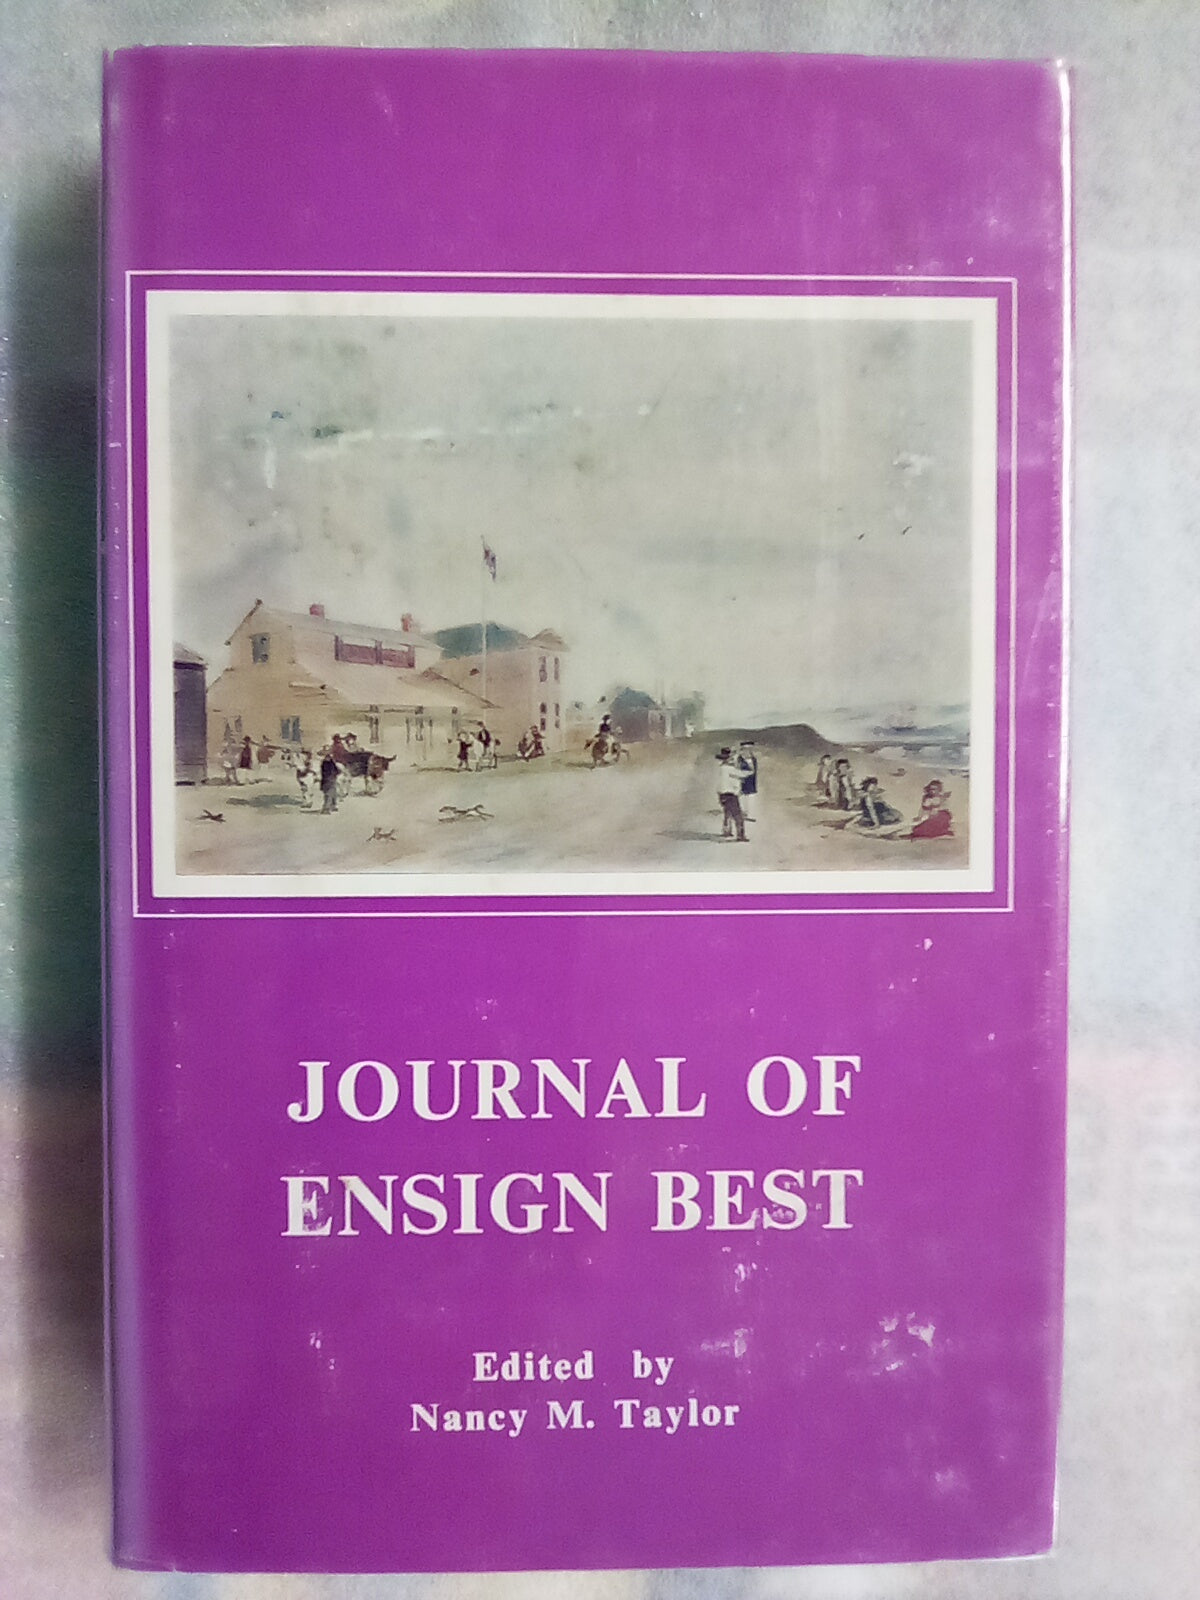 Journal of Ensign Best